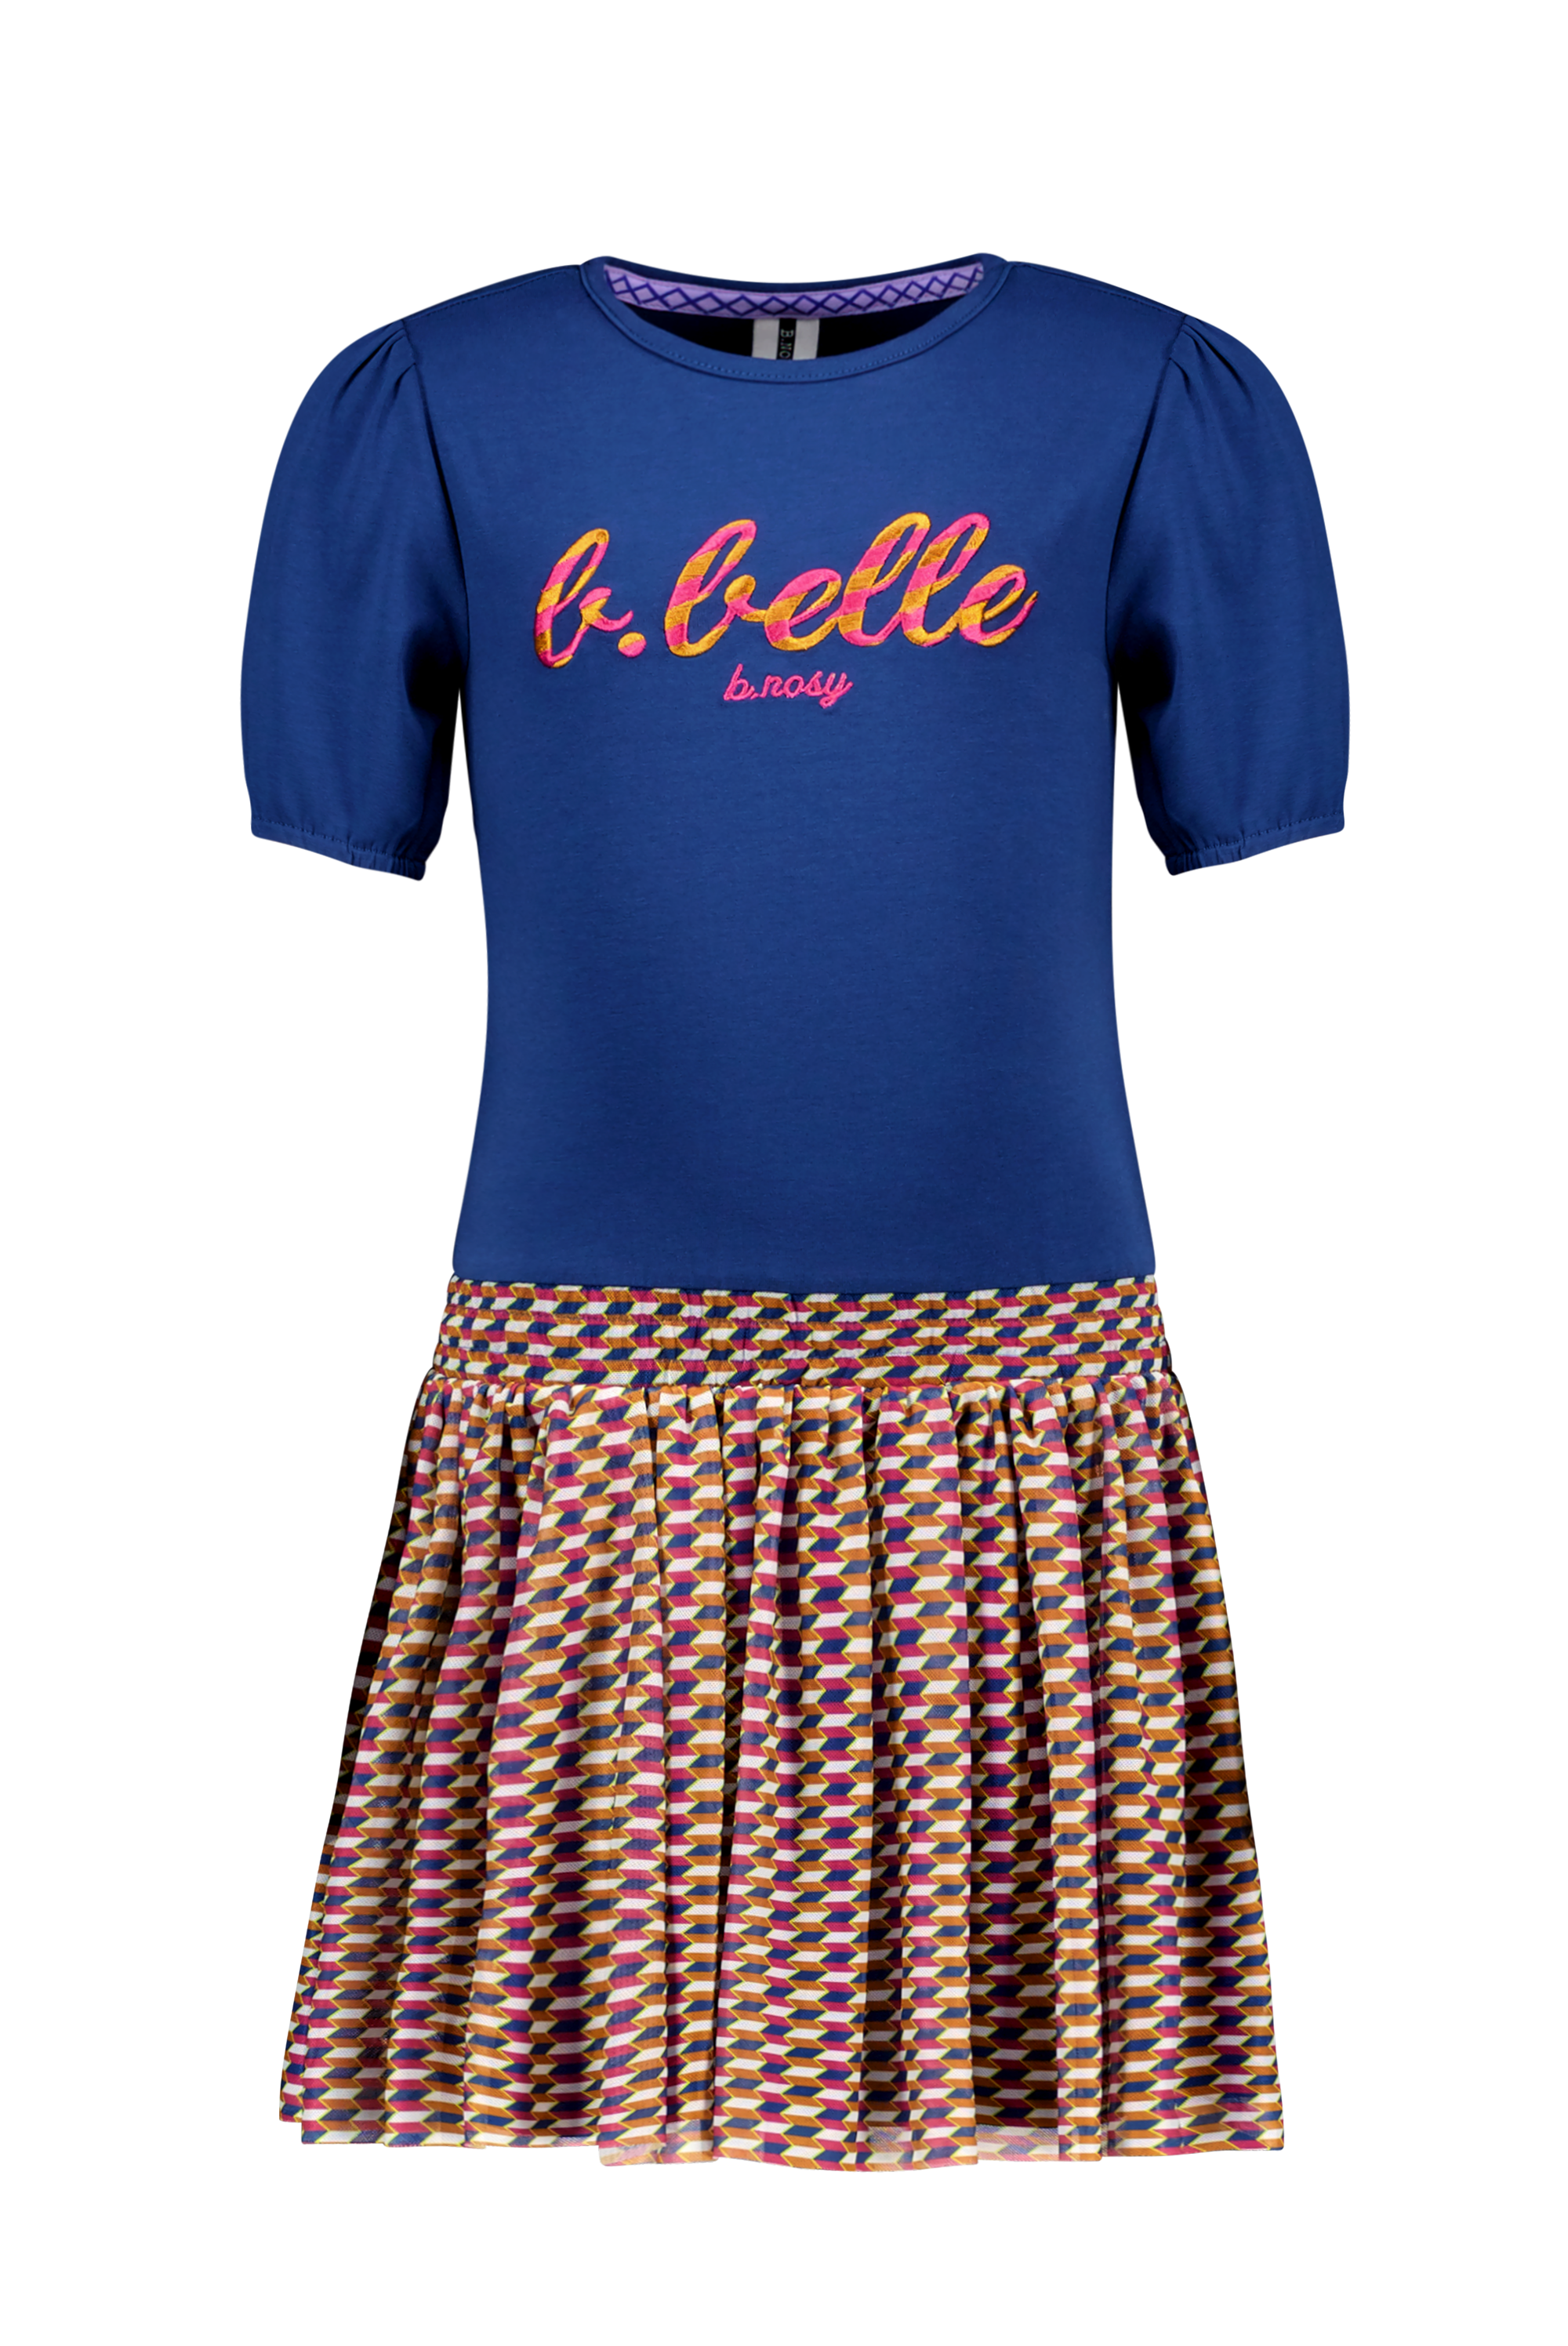 Rok Girls dress with puffed sleeves and retro ao mesh skirt + belt